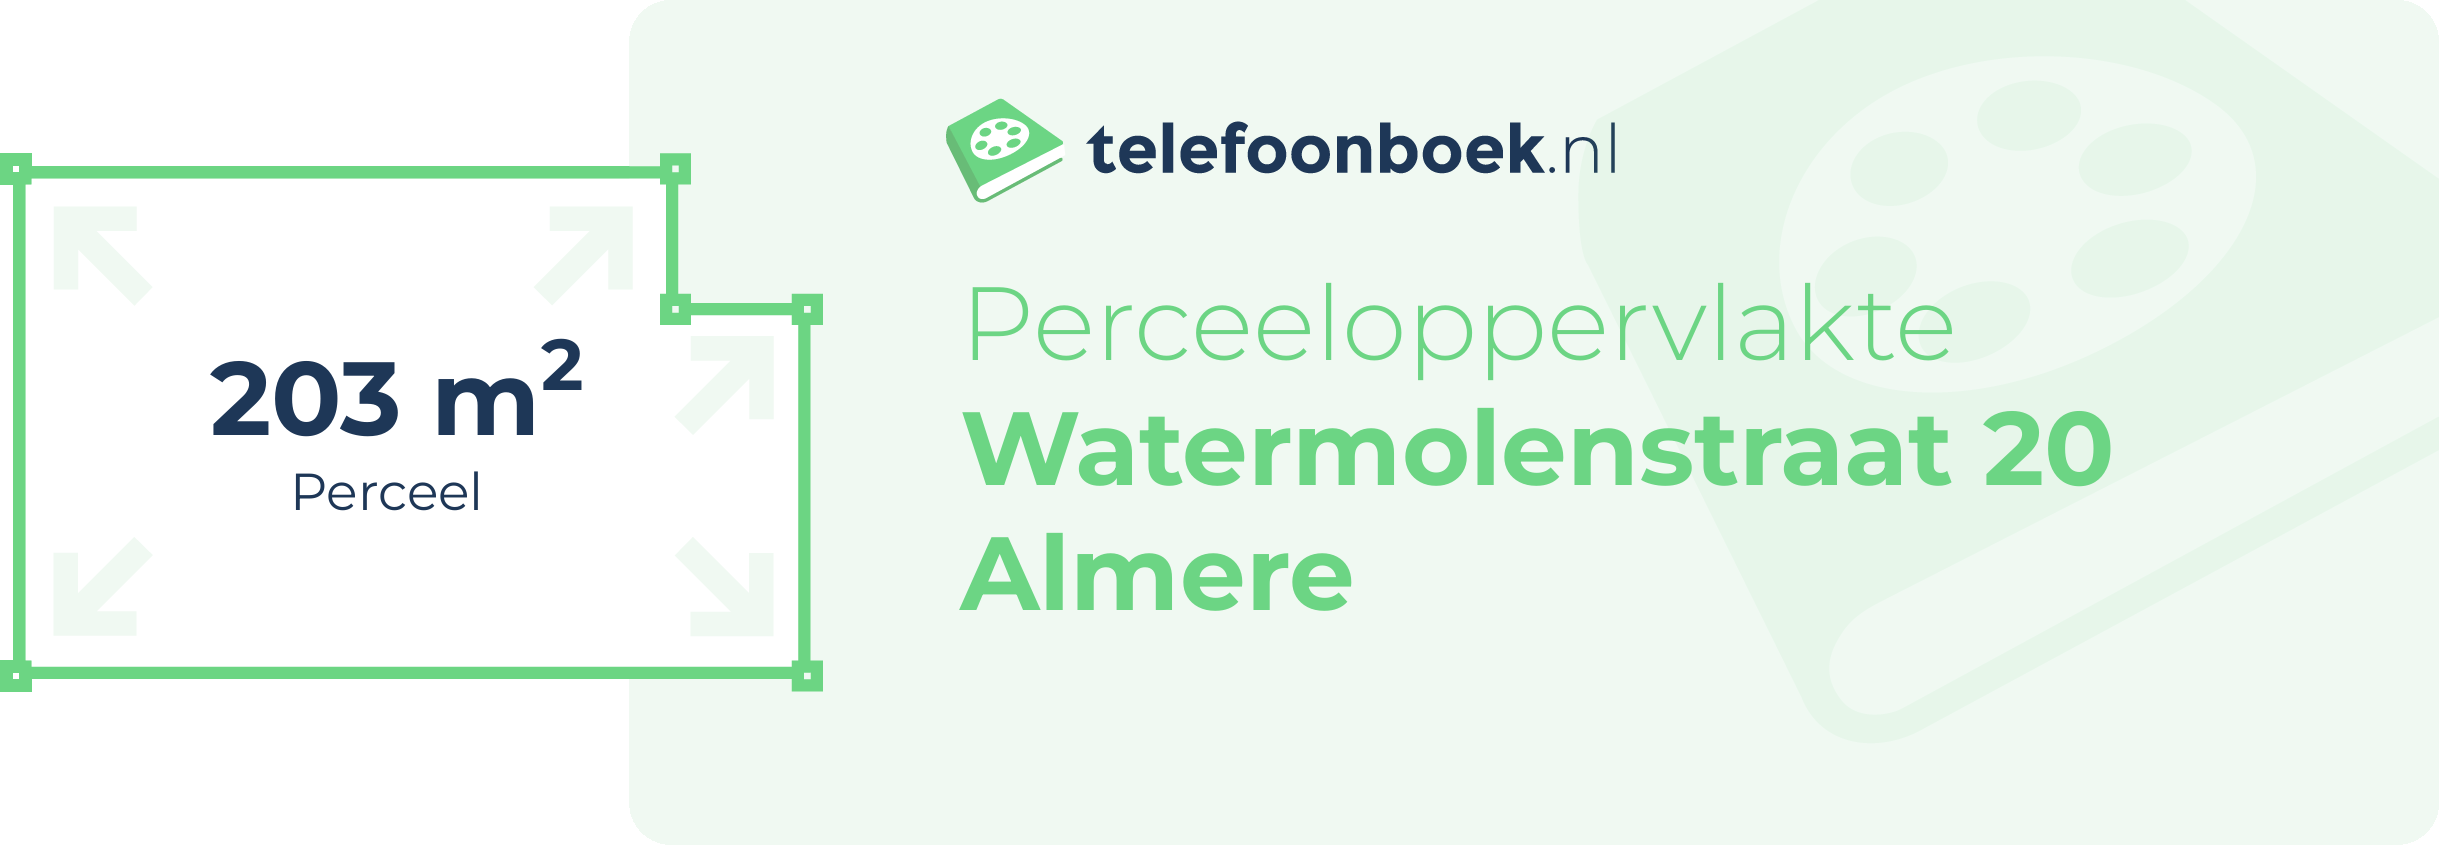 Perceeloppervlakte Watermolenstraat 20 Almere